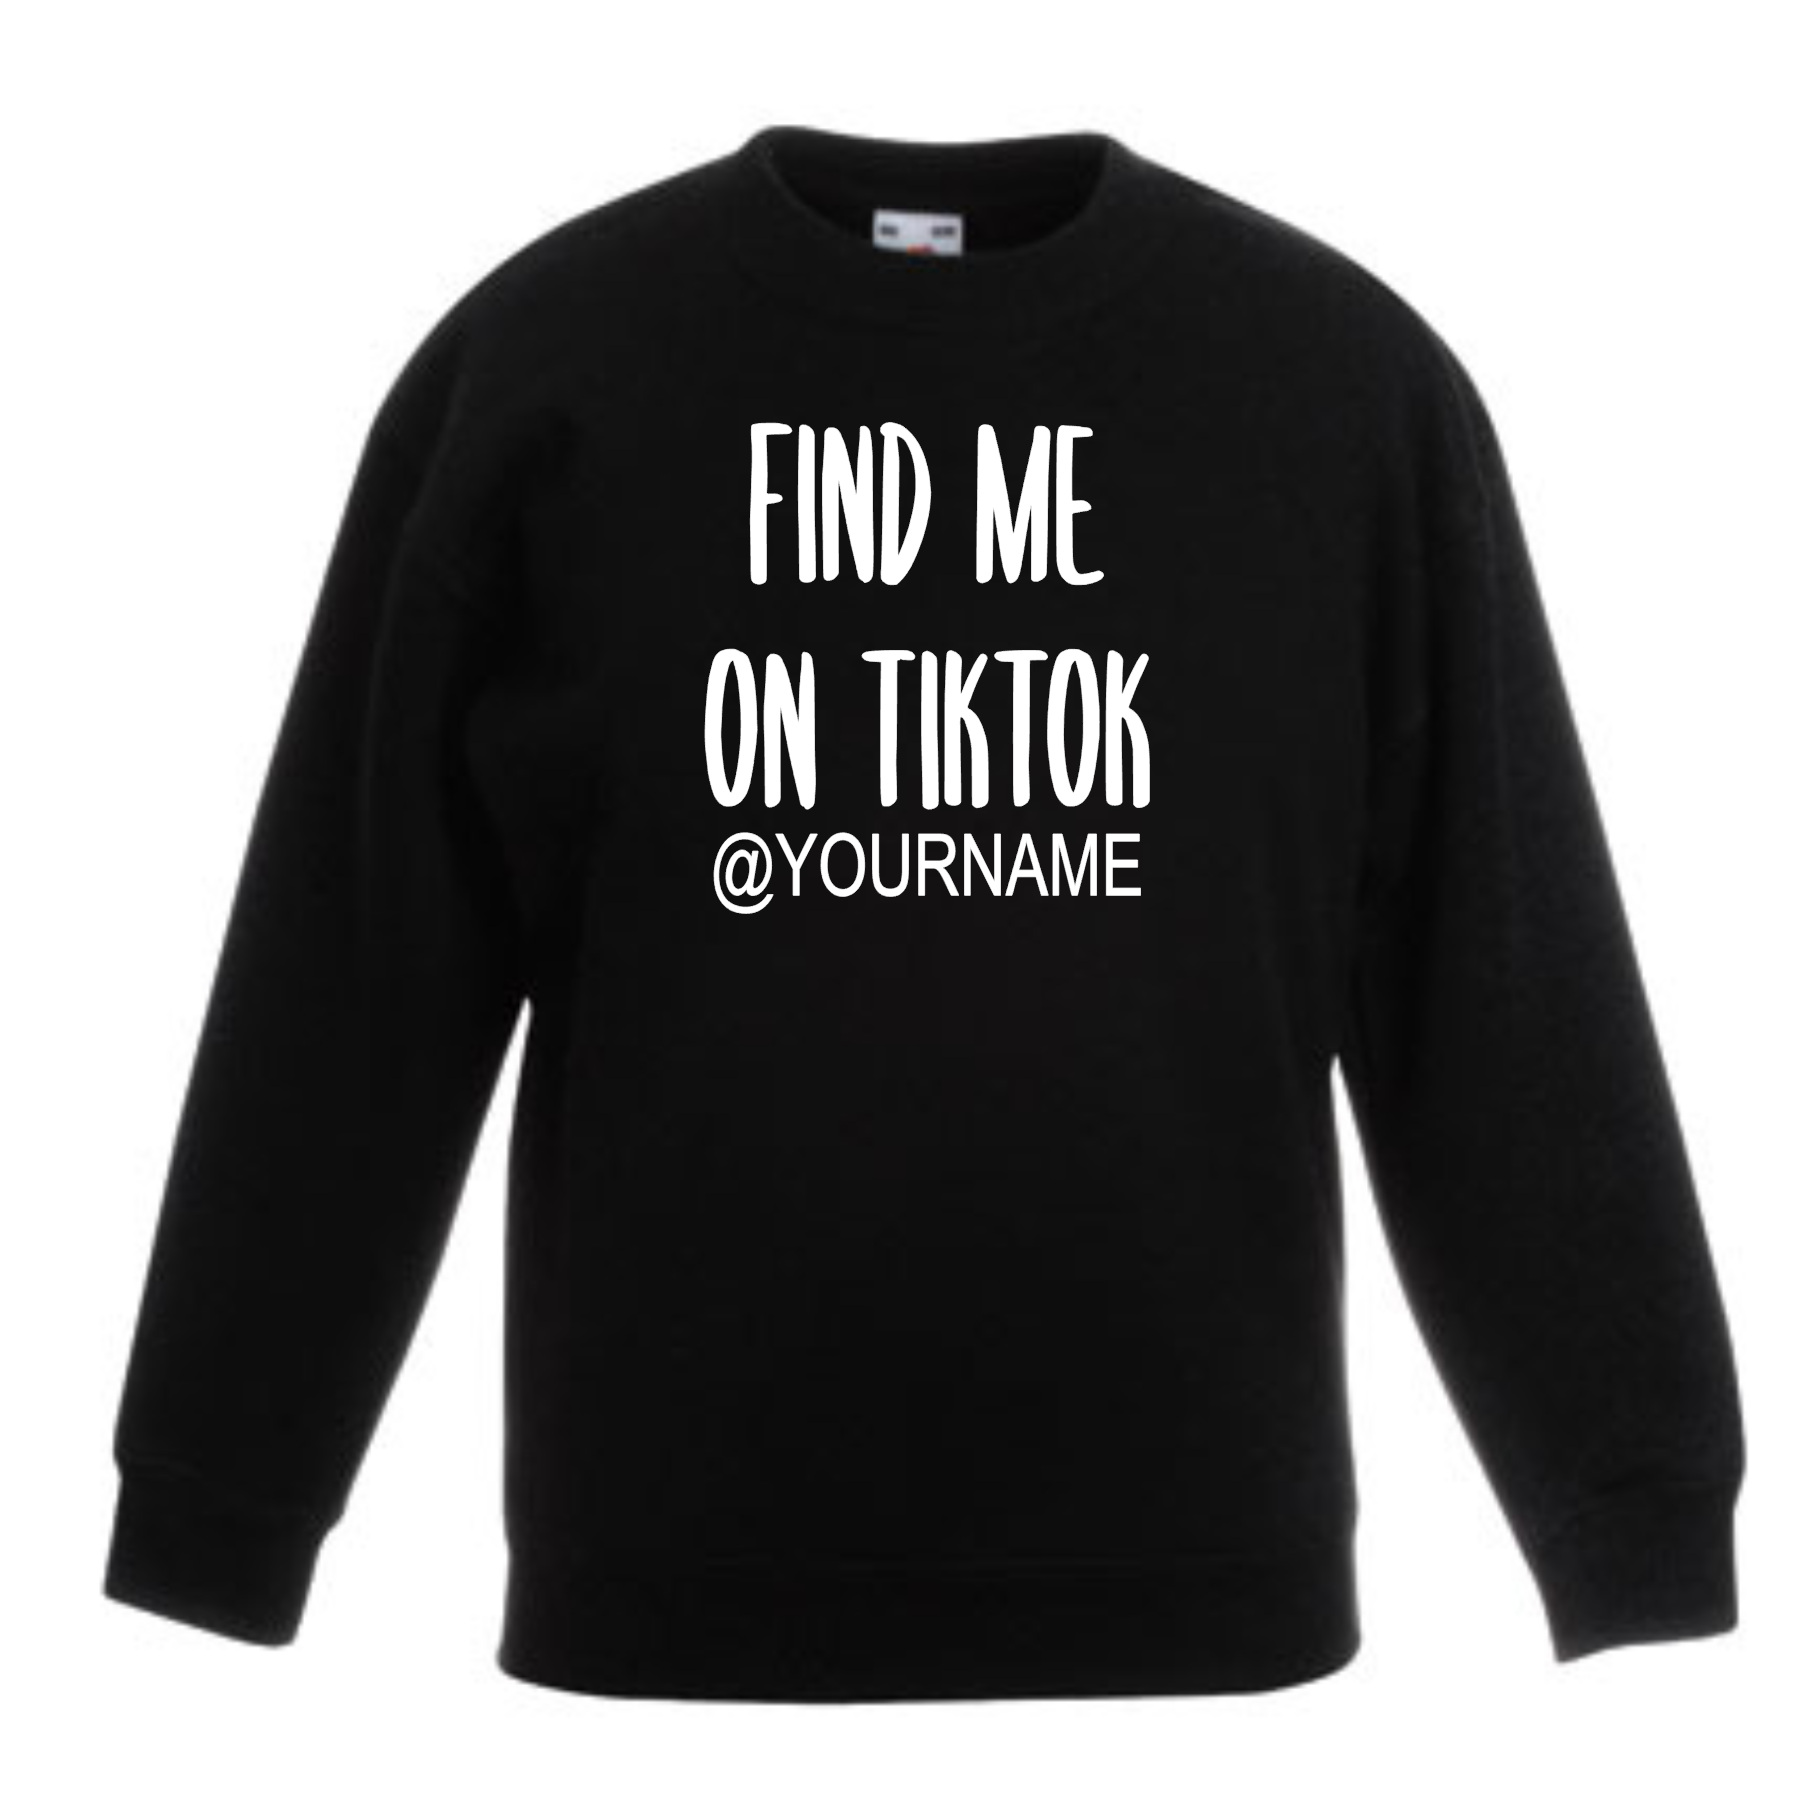 Kids sweater – Find me on tiktok @yourname